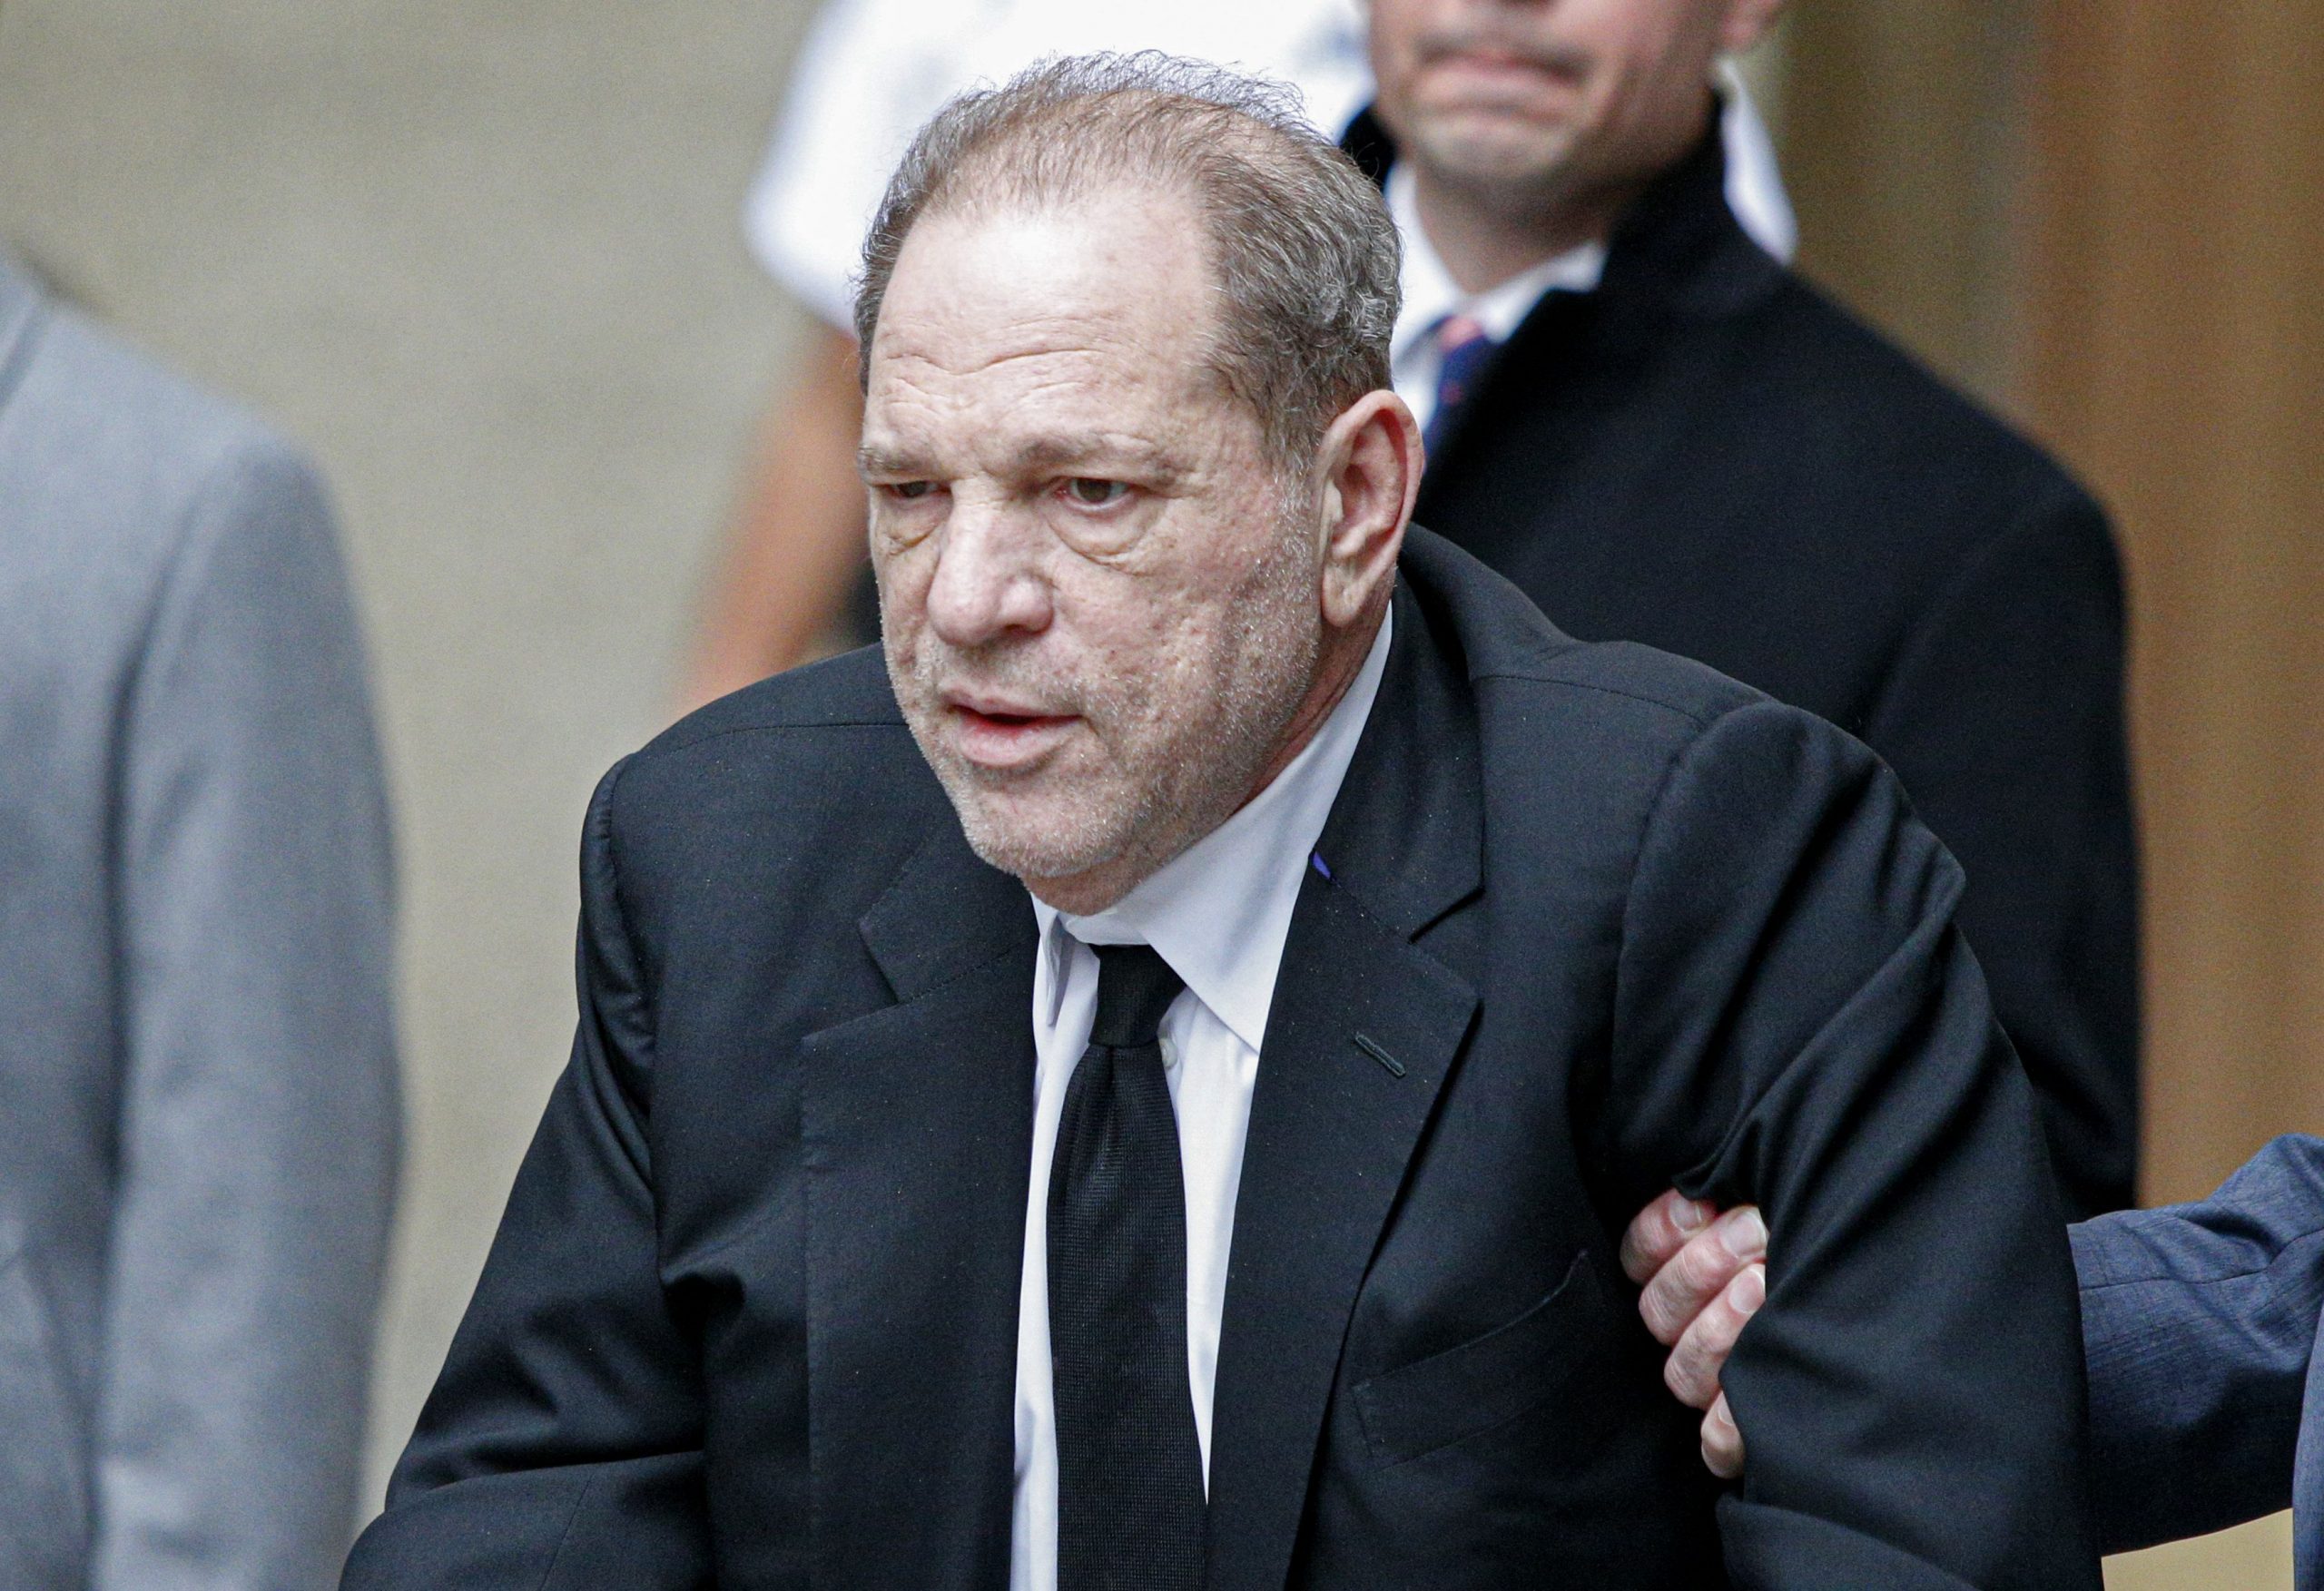 Harvey Weinstein found guilty in landmark #MeToo moment